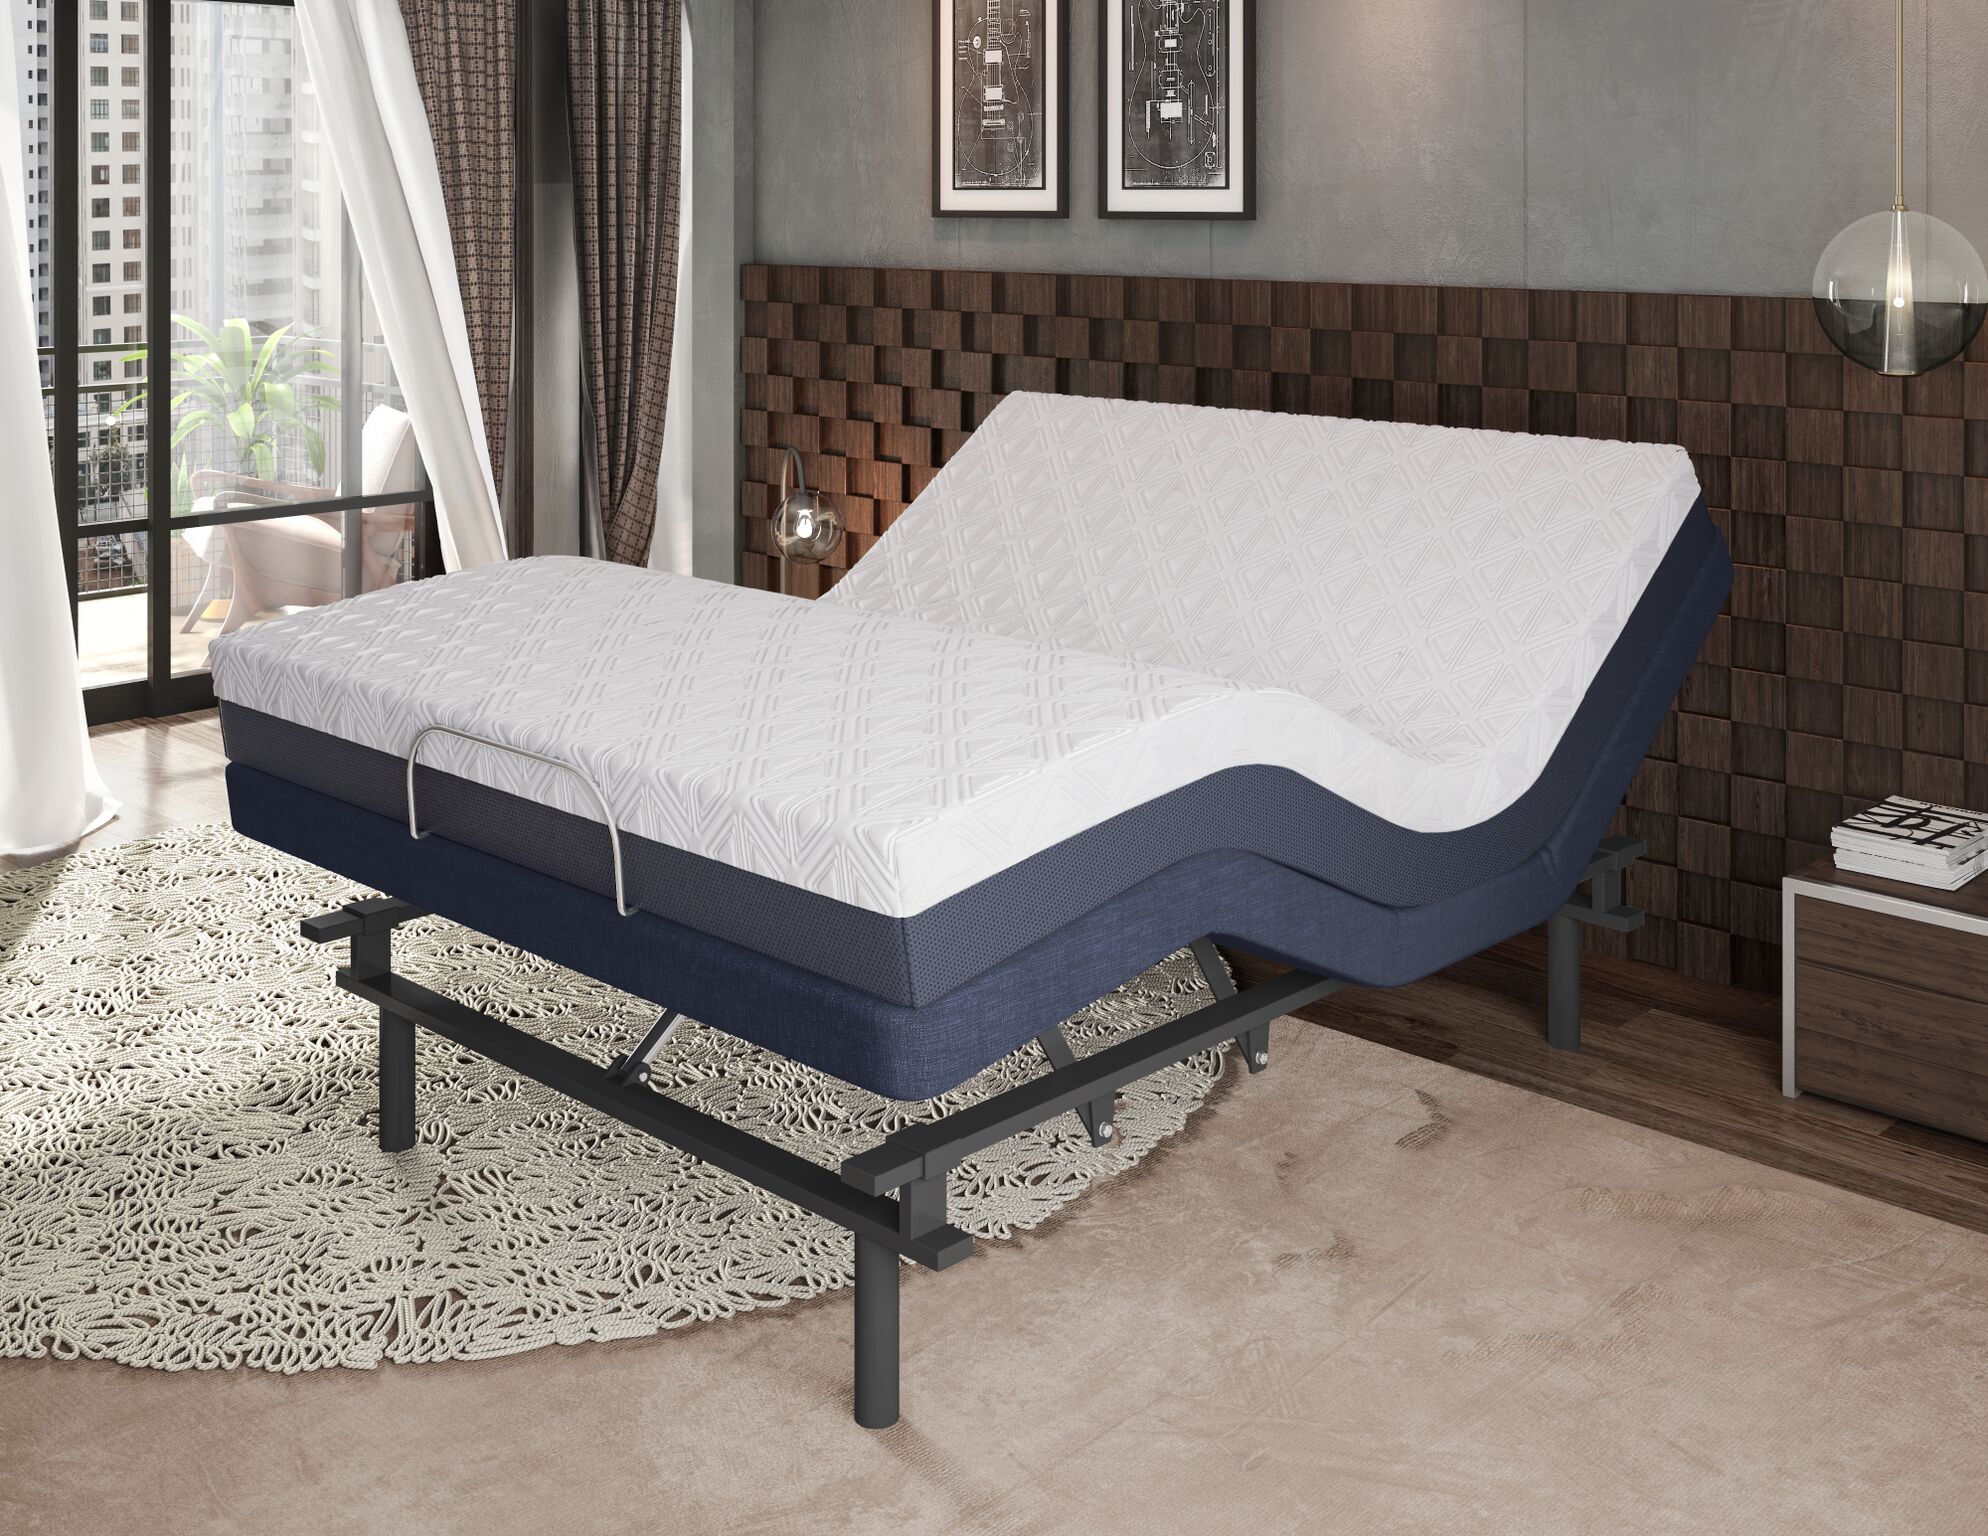 adjustable bed mattresses portland oregon